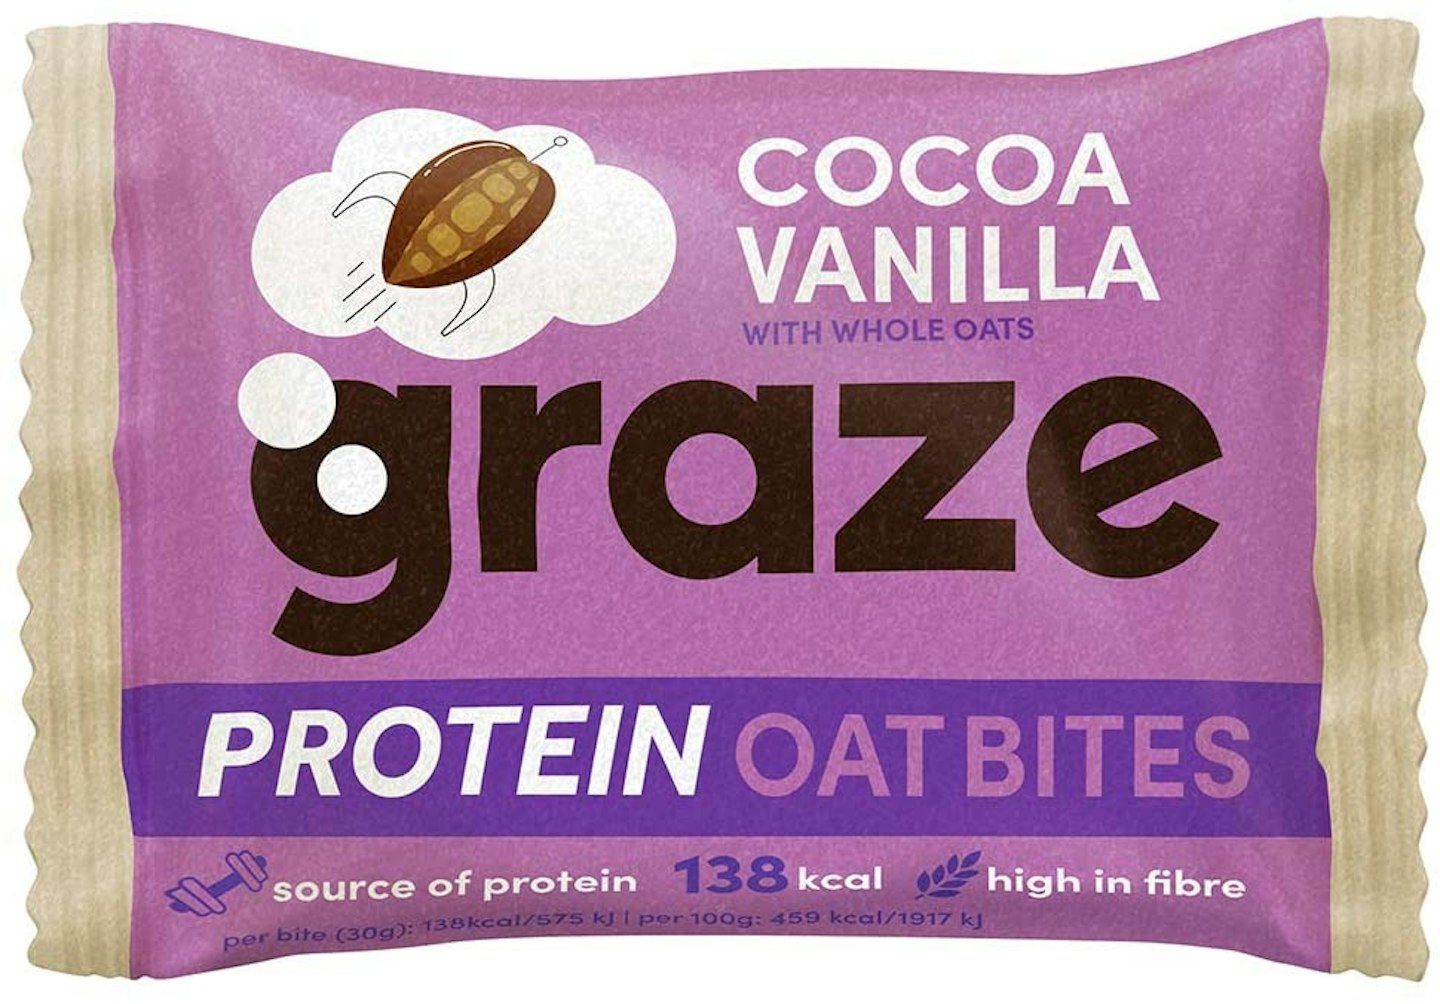 Graze Cocoa Vanilla Protein Oat Bites